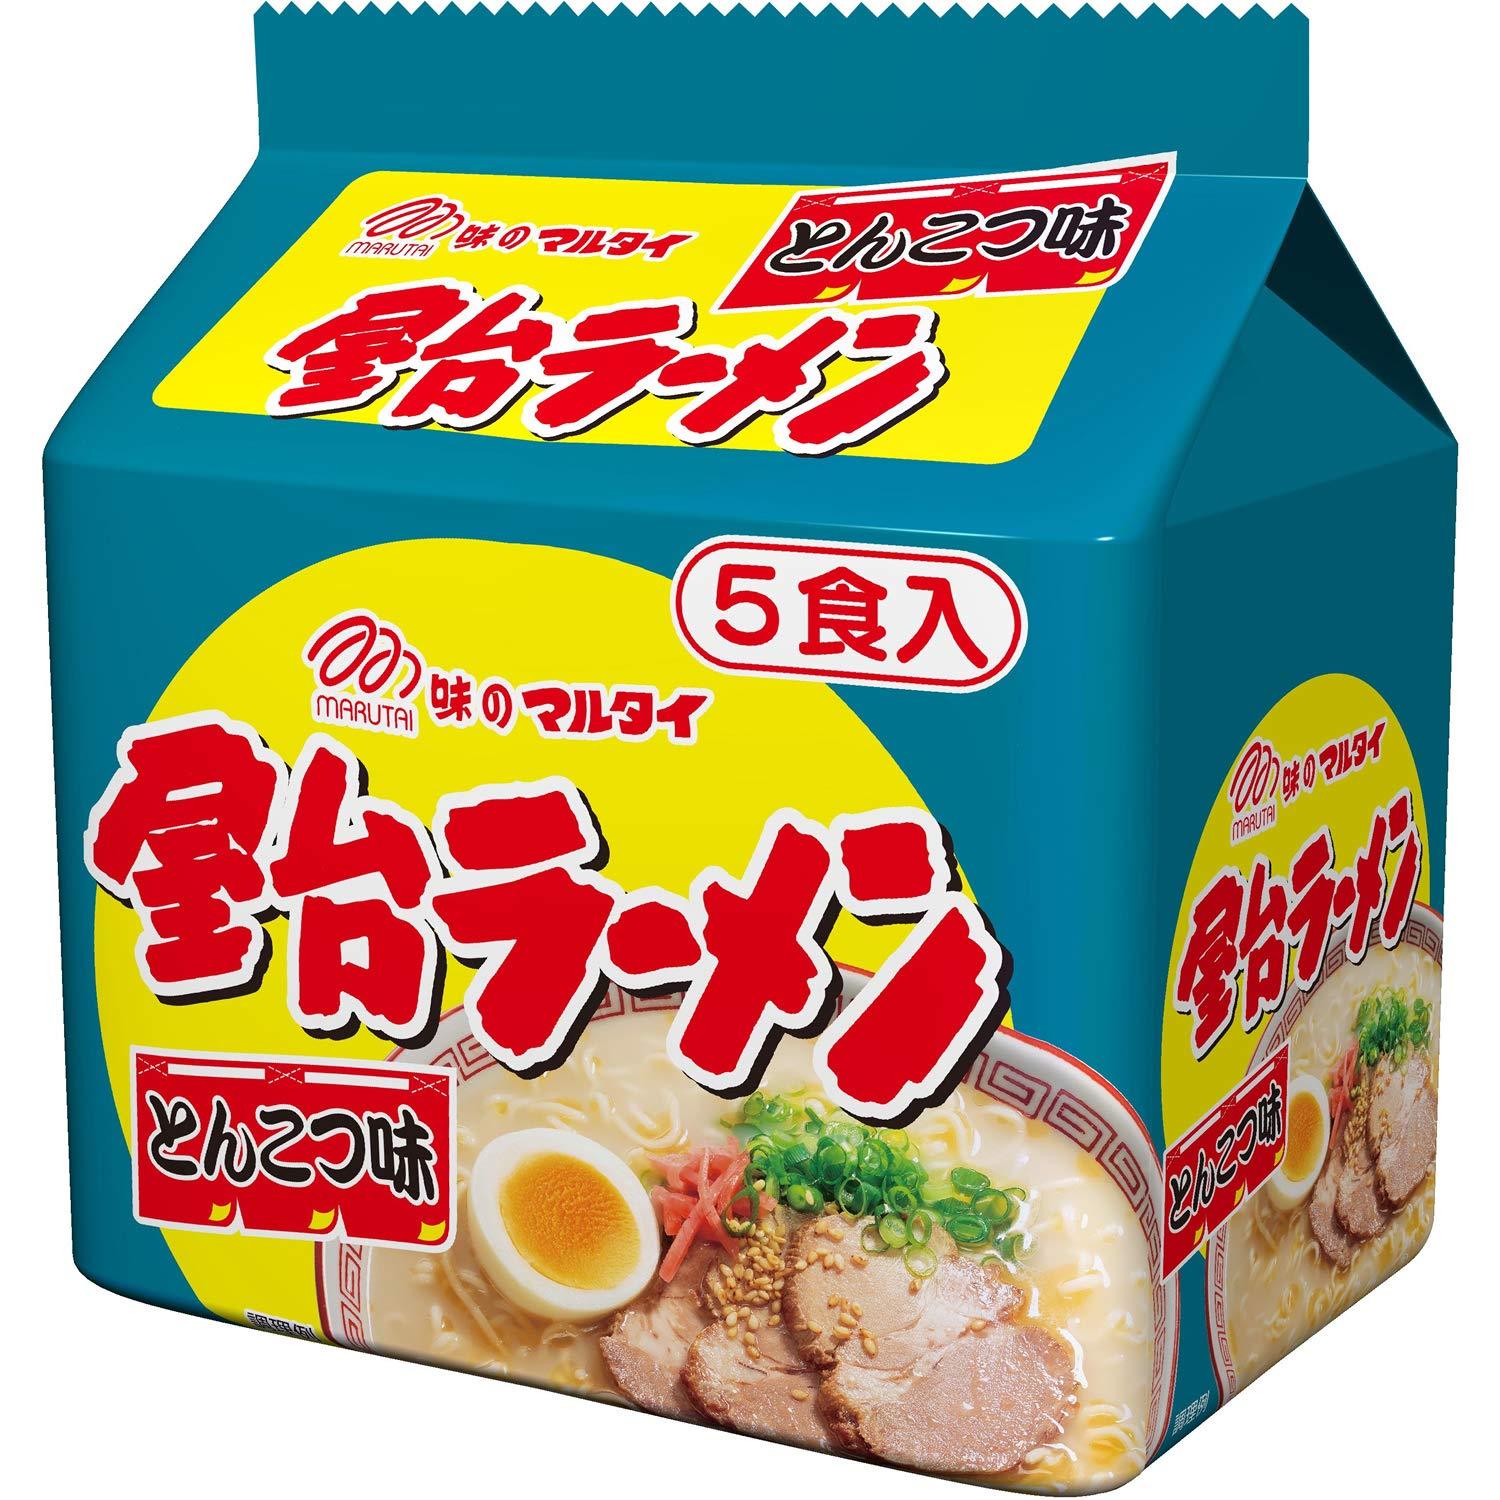 Marutai Tonkotsu Ramen Instant Noodles 5 Servings, Japanese Taste